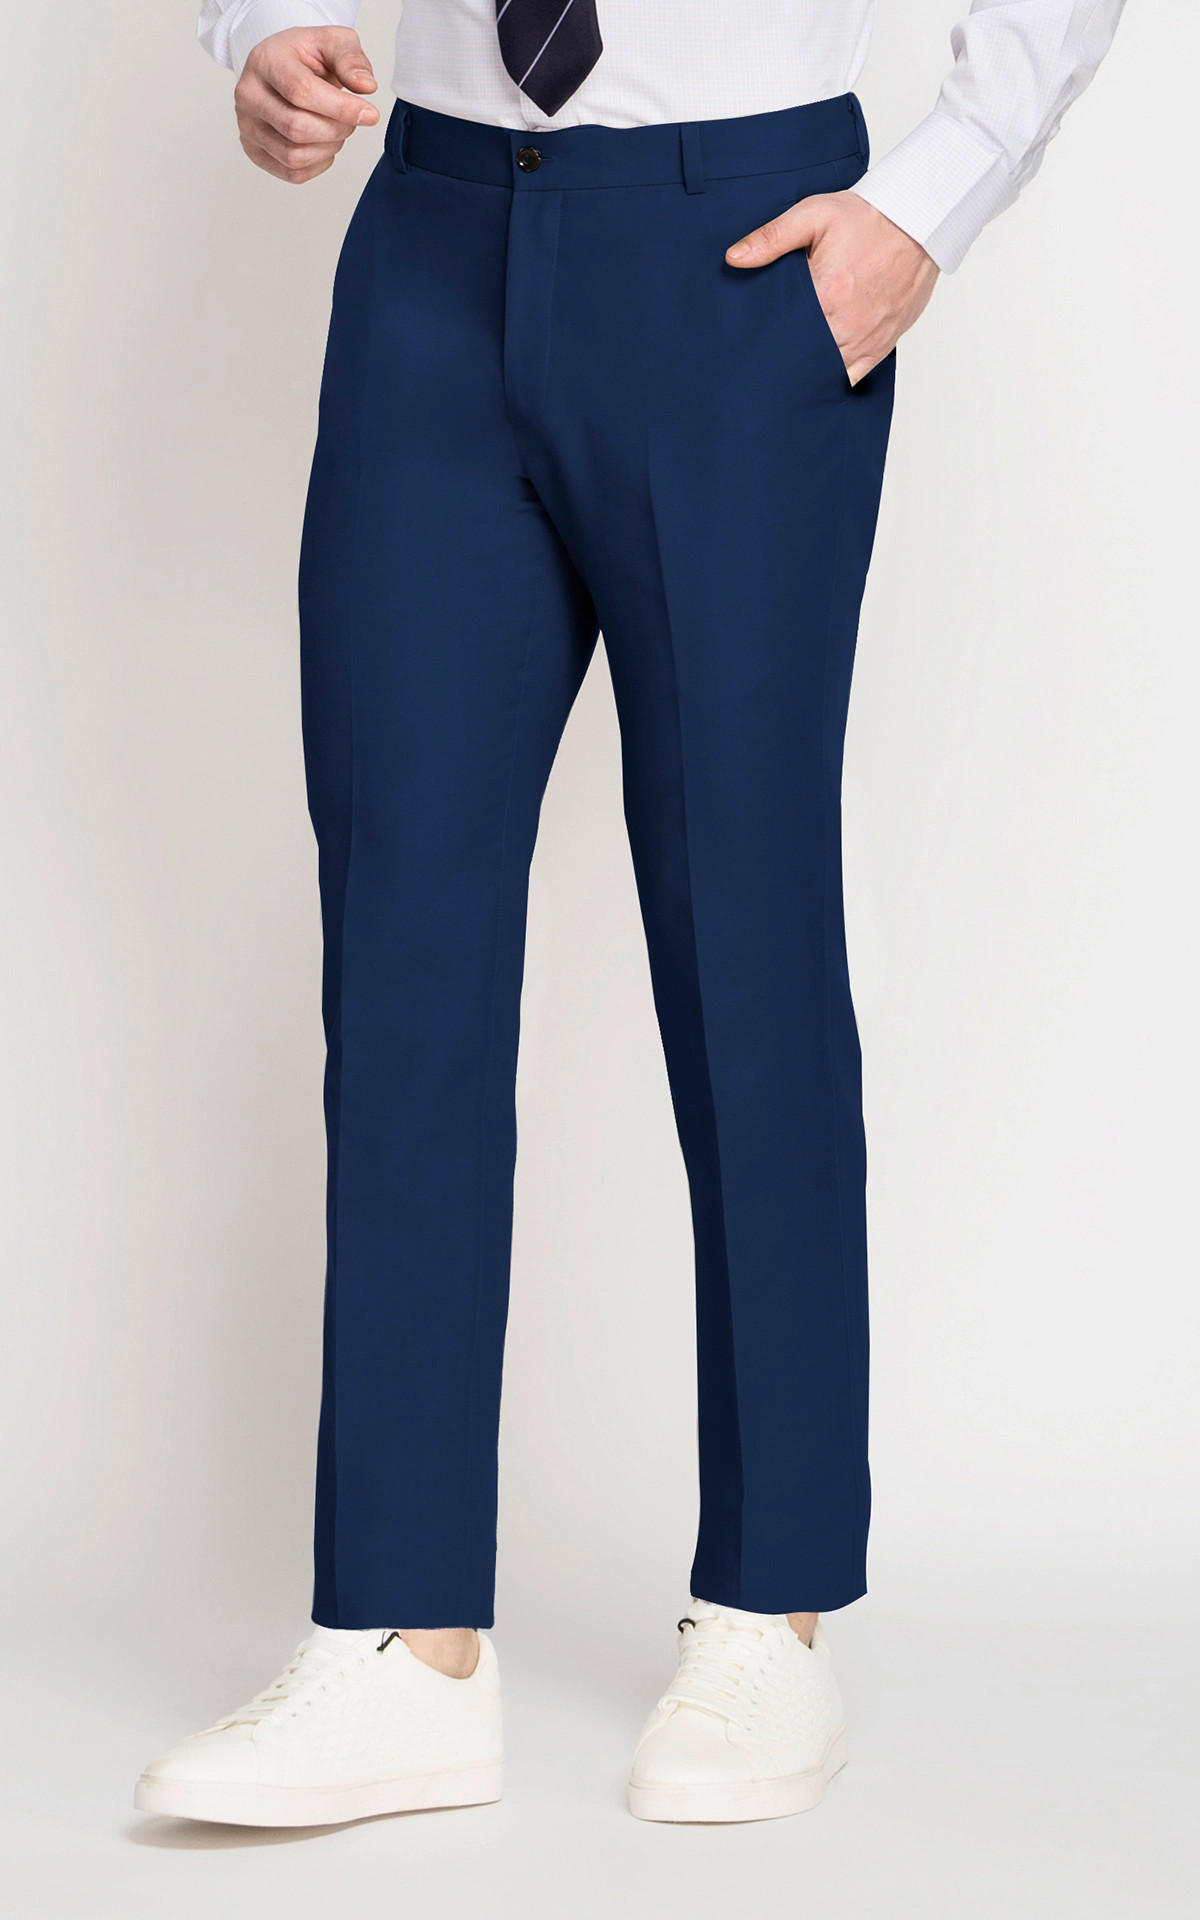 Buy Haoser Men's Cotton Blend Formal Trouser (HI-TRNavy2_Navy Blue_30) Pack  of 1 at Amazon.in